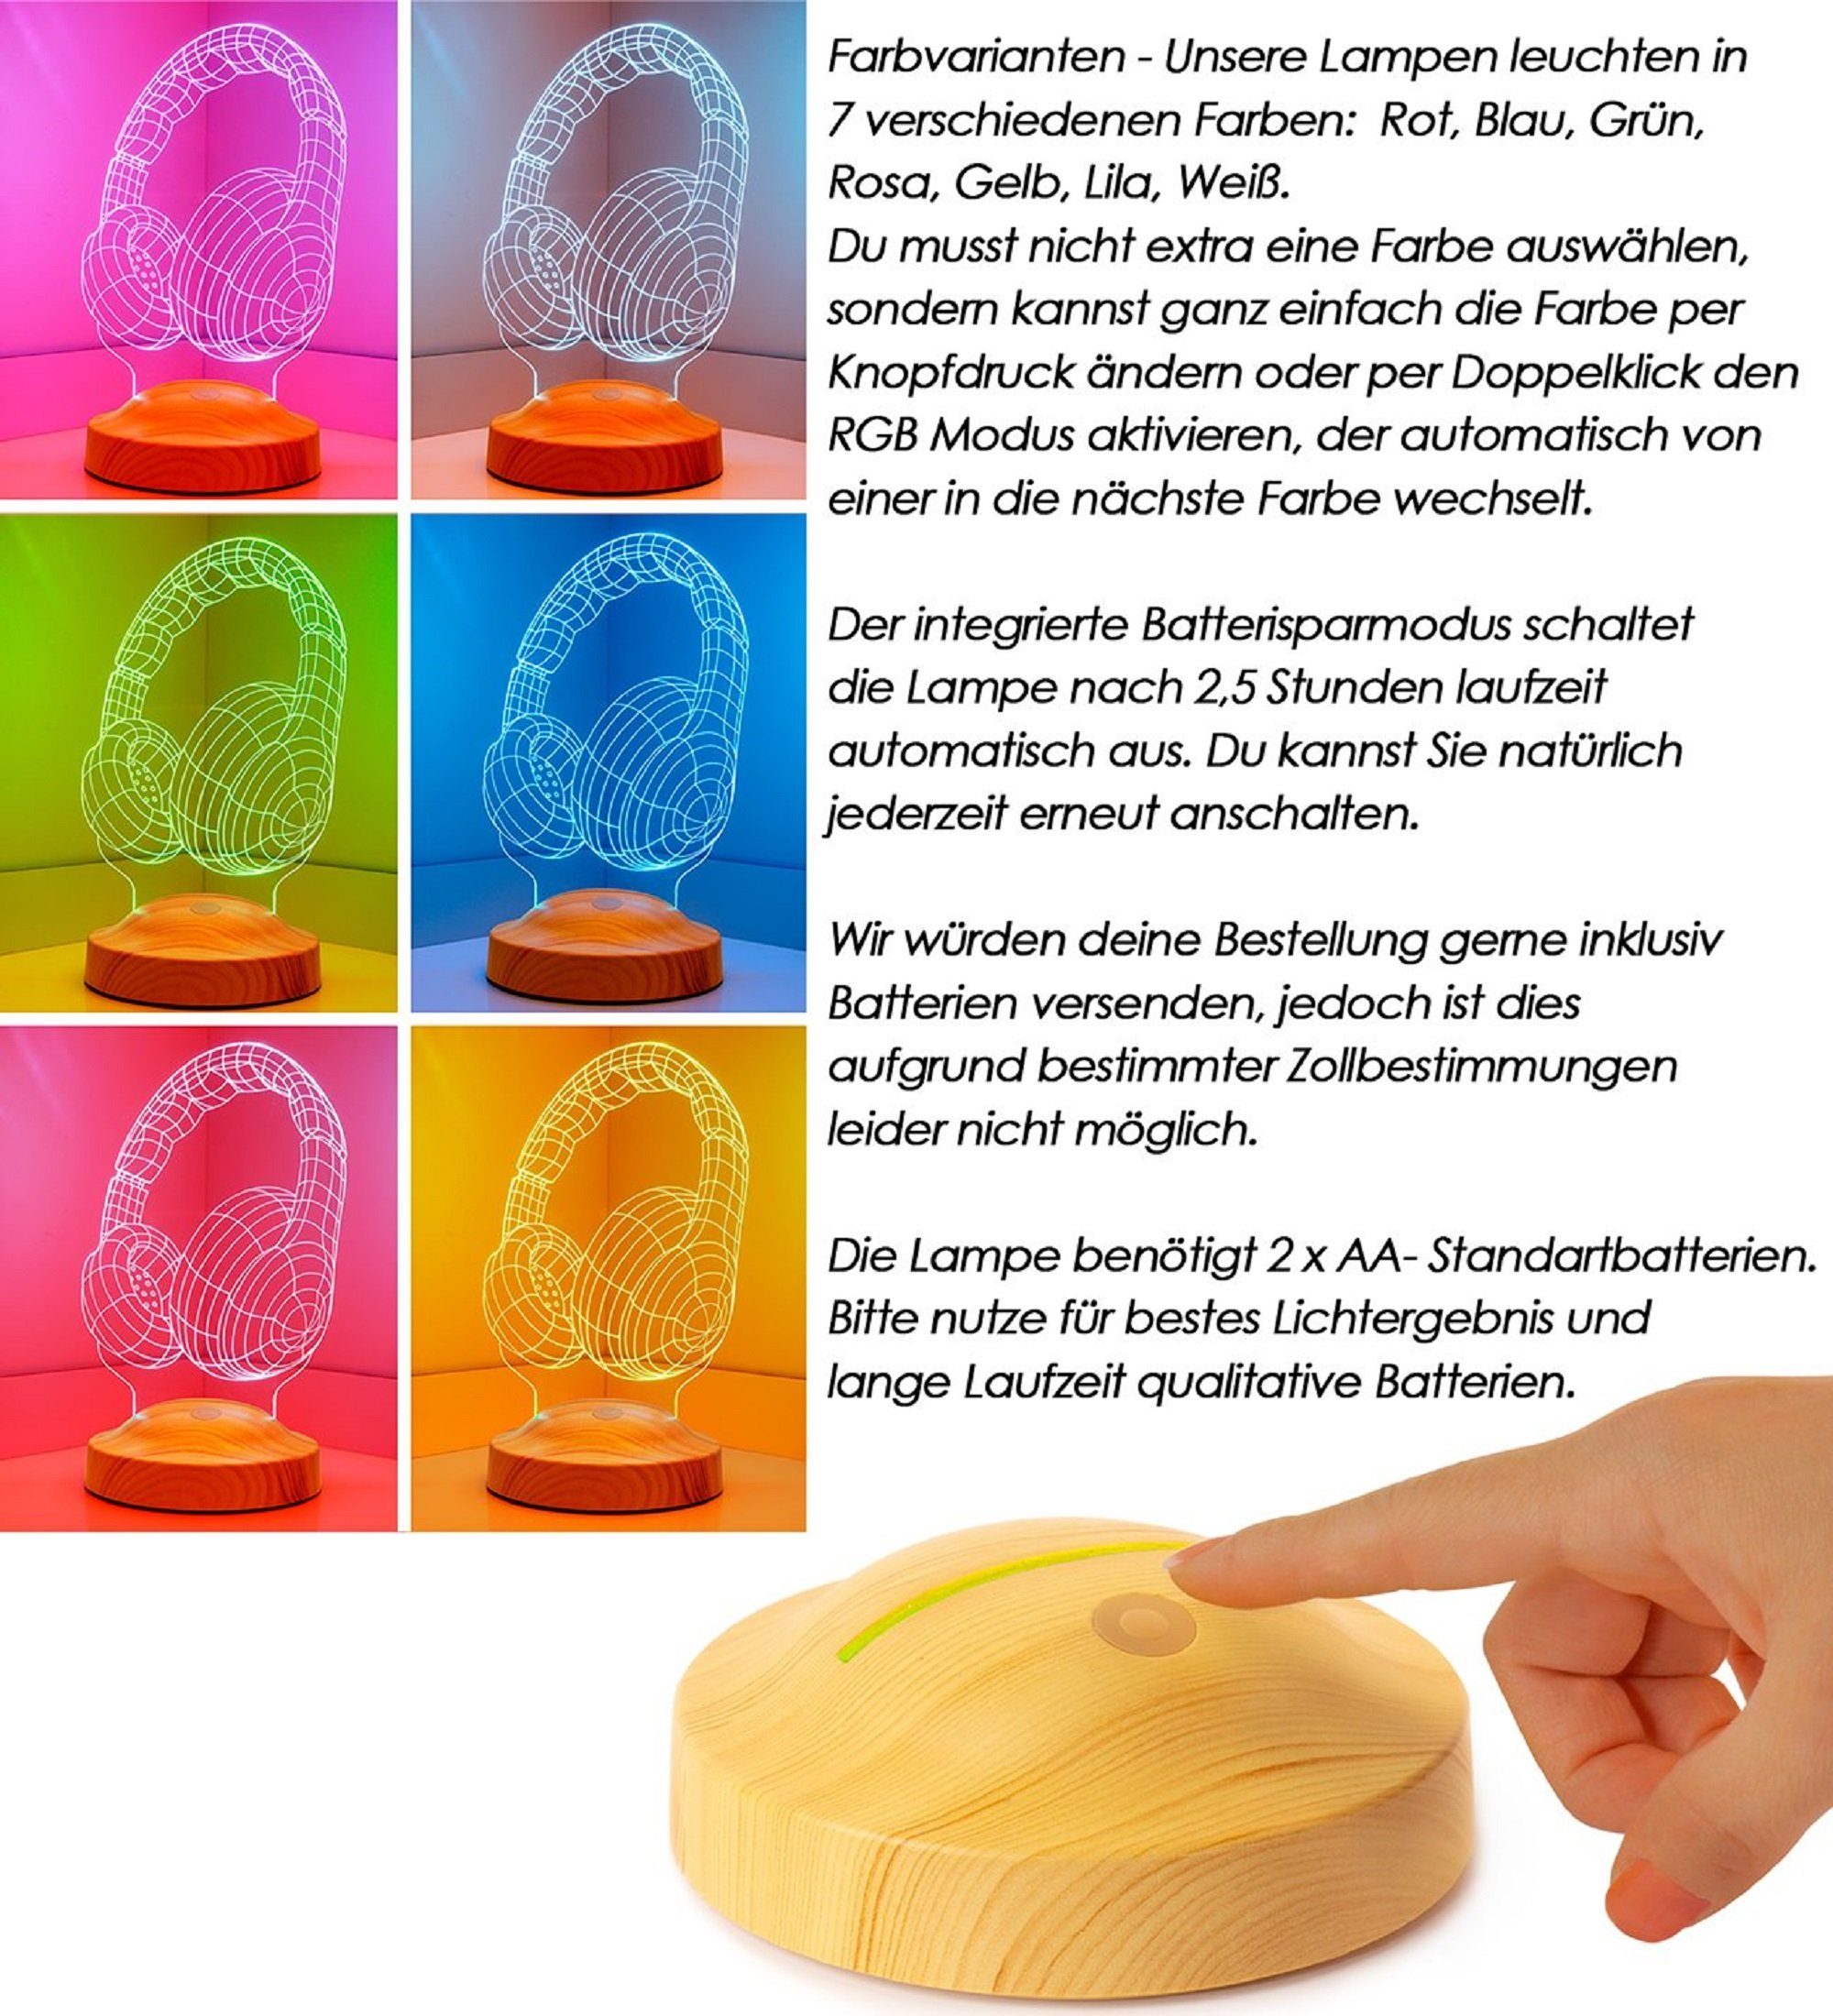 LED LED Kopfhörer LED Led 3D Lampe Musiker, für Lampe integriert, fest Nachttischlampe in 6 mehrfarbige verschiedenen Geschenkelampe LED Farben, Geschenk